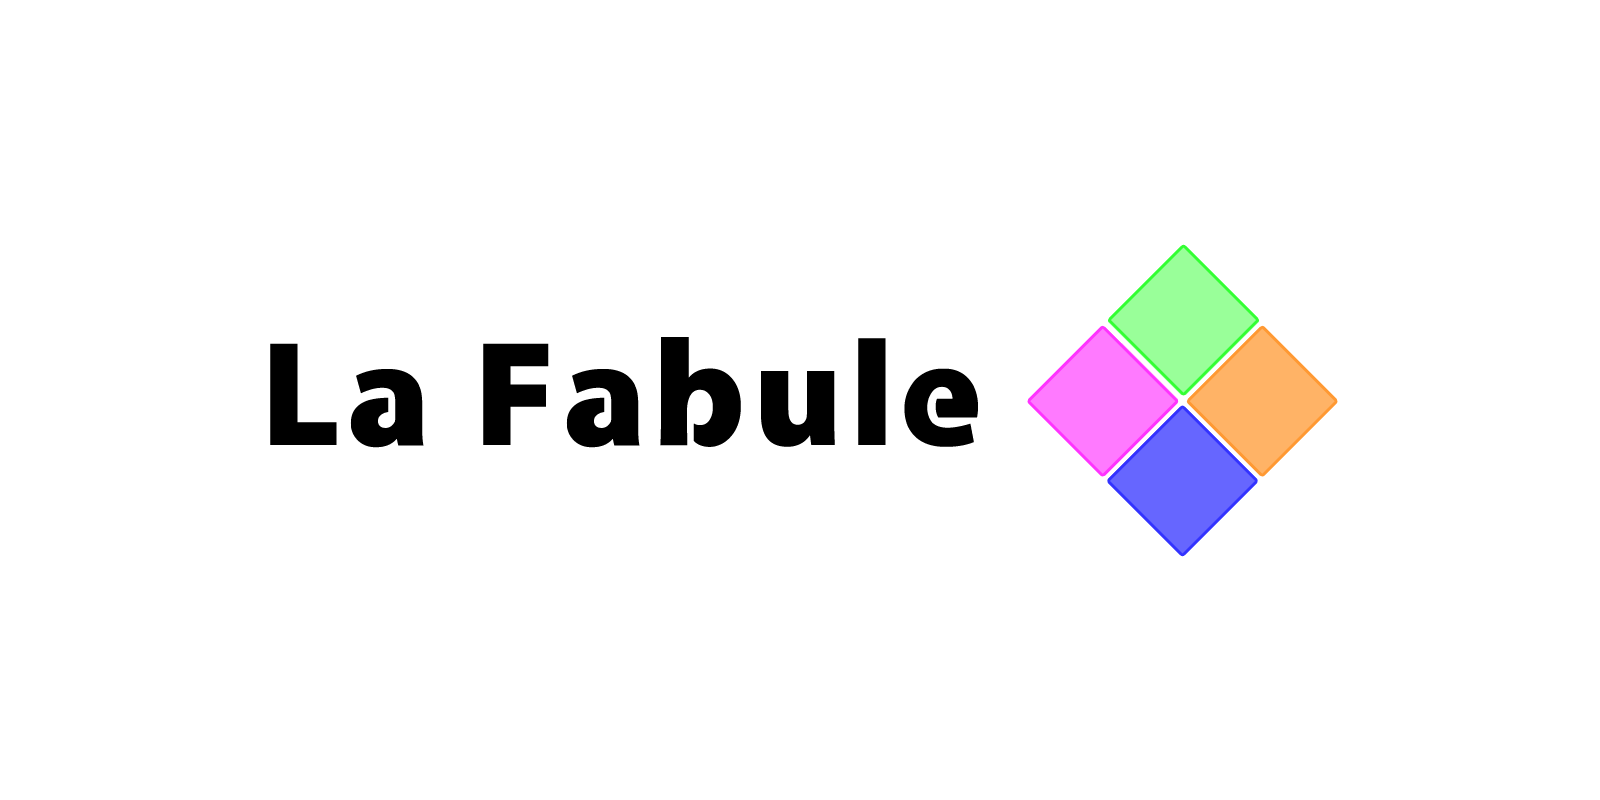 Rhombus design for the La Fabule logo.